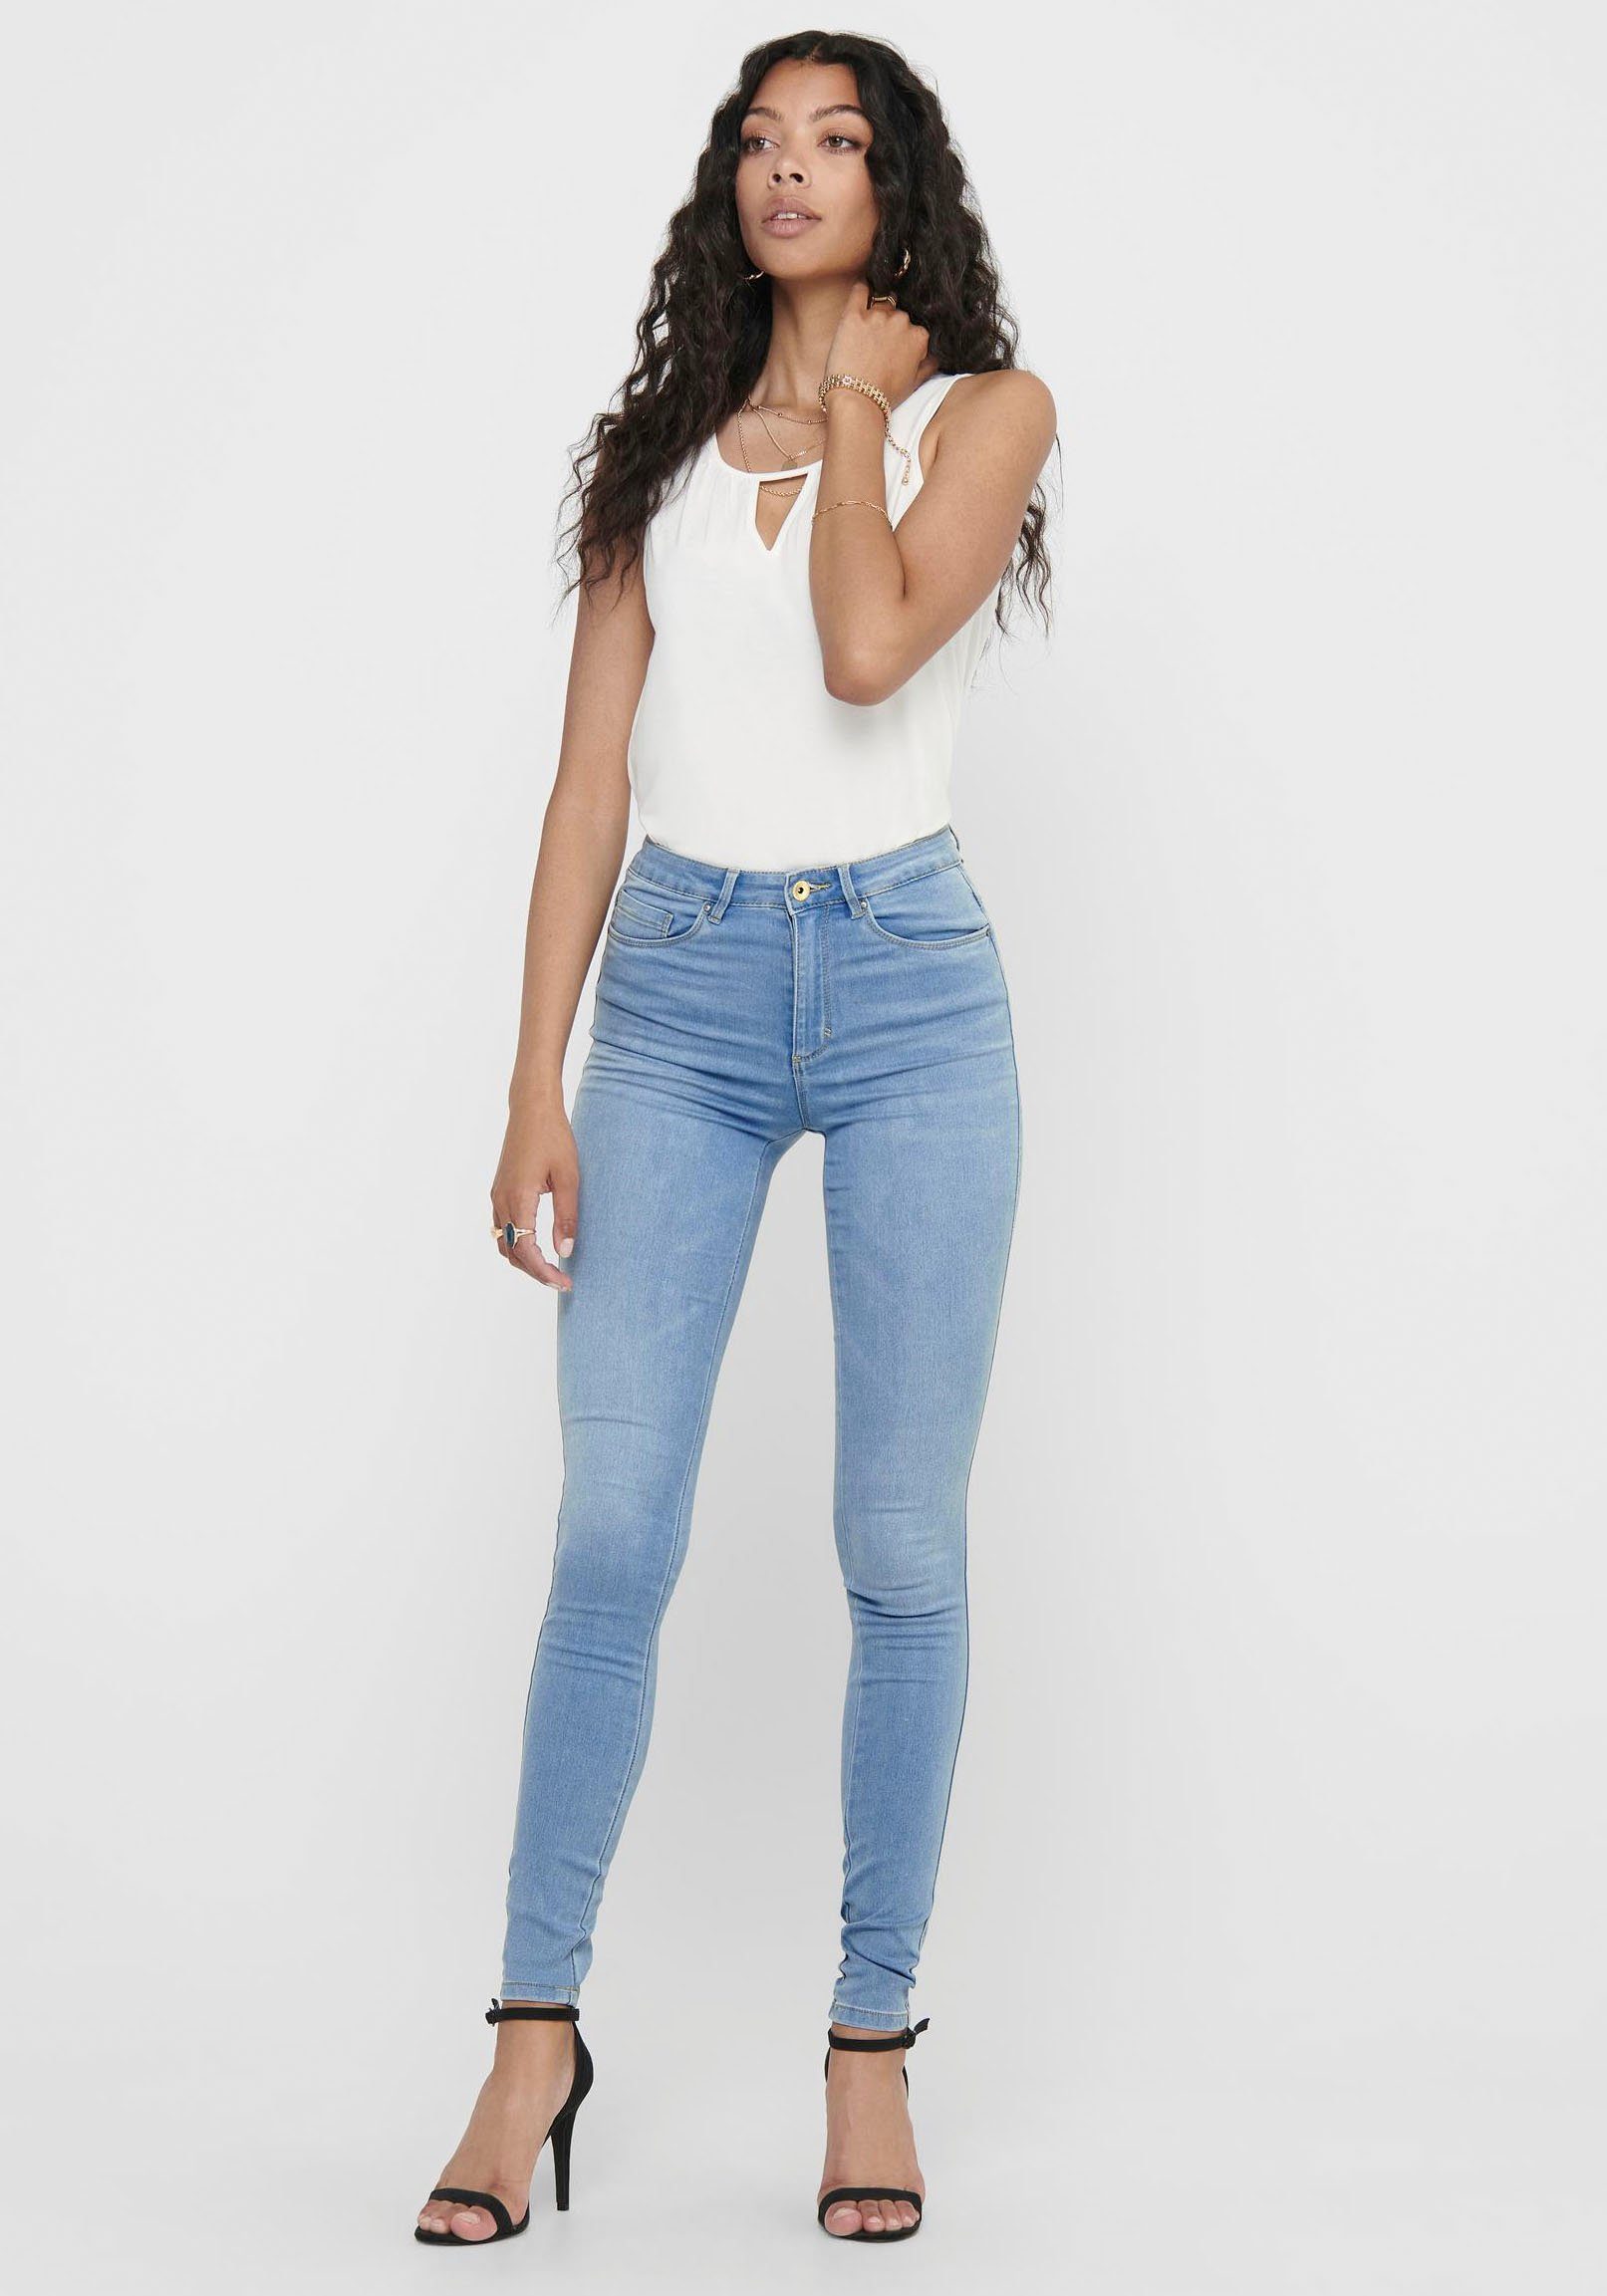 rand periodieke Avonturier Only High-waist jeans ONLROYAL online shop | OTTO